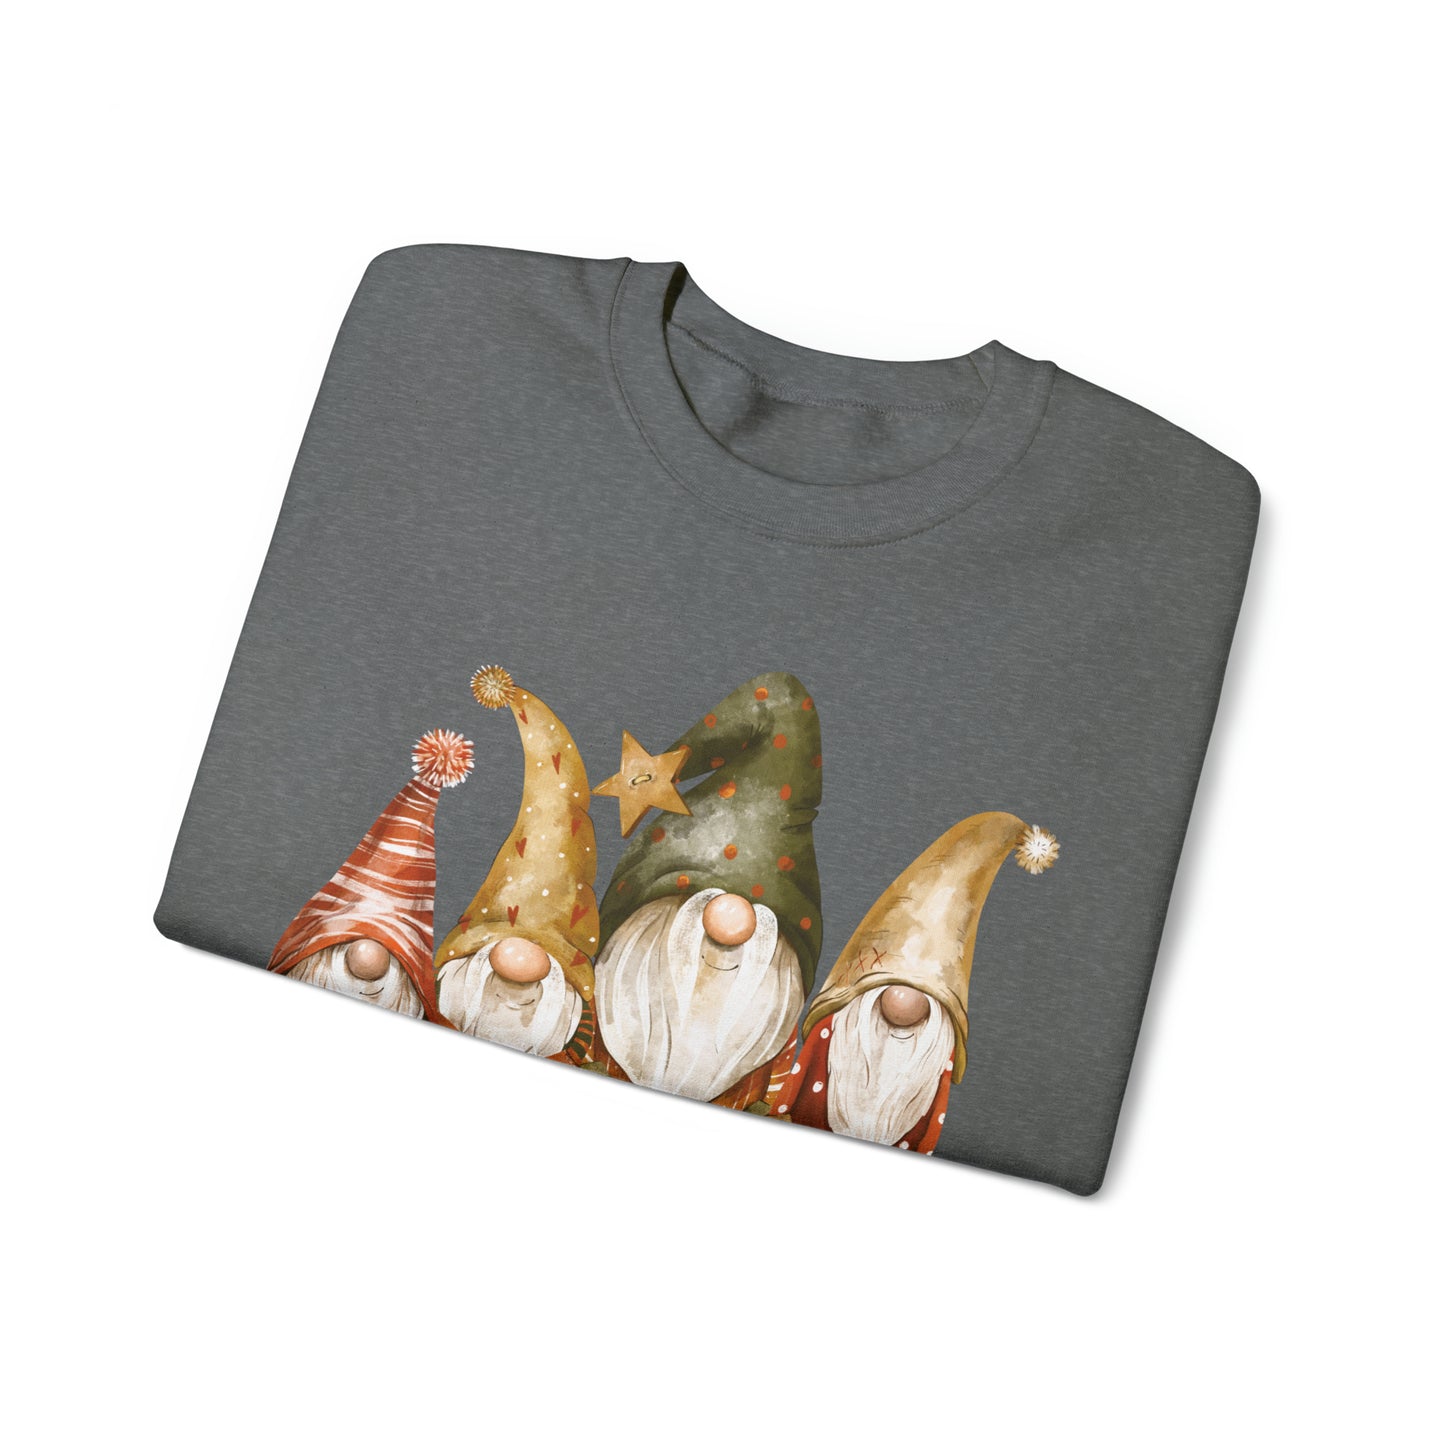 Holly Jolly Christmas Sweatshirt, Retro Gnome Christmas Sweatshirt, Have A Holly Jolly Vibes Christmas Sweatshirt